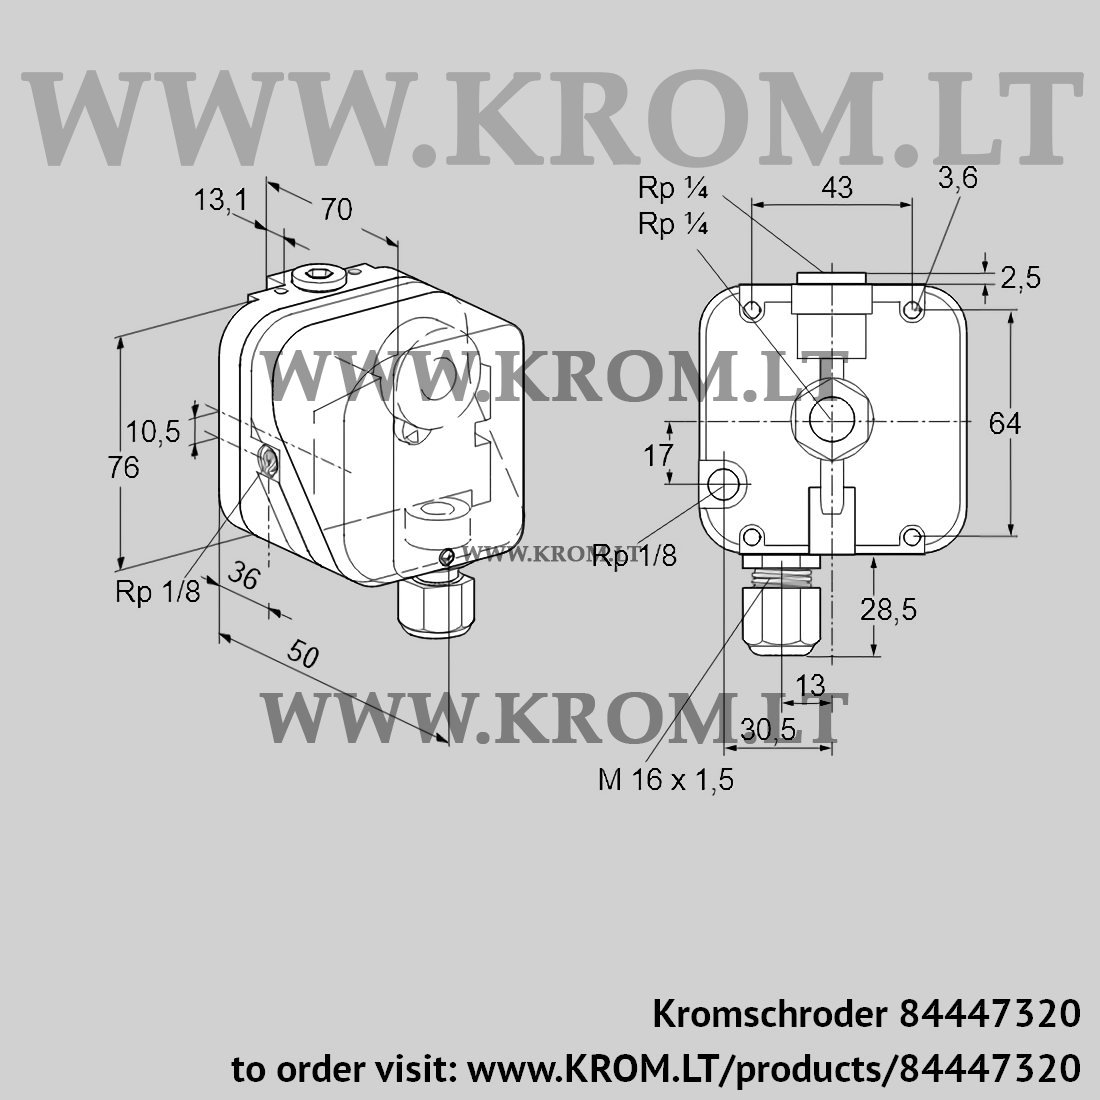 Kromschroder DG 10UG-3, 84447320 pressure switch for gas | Online